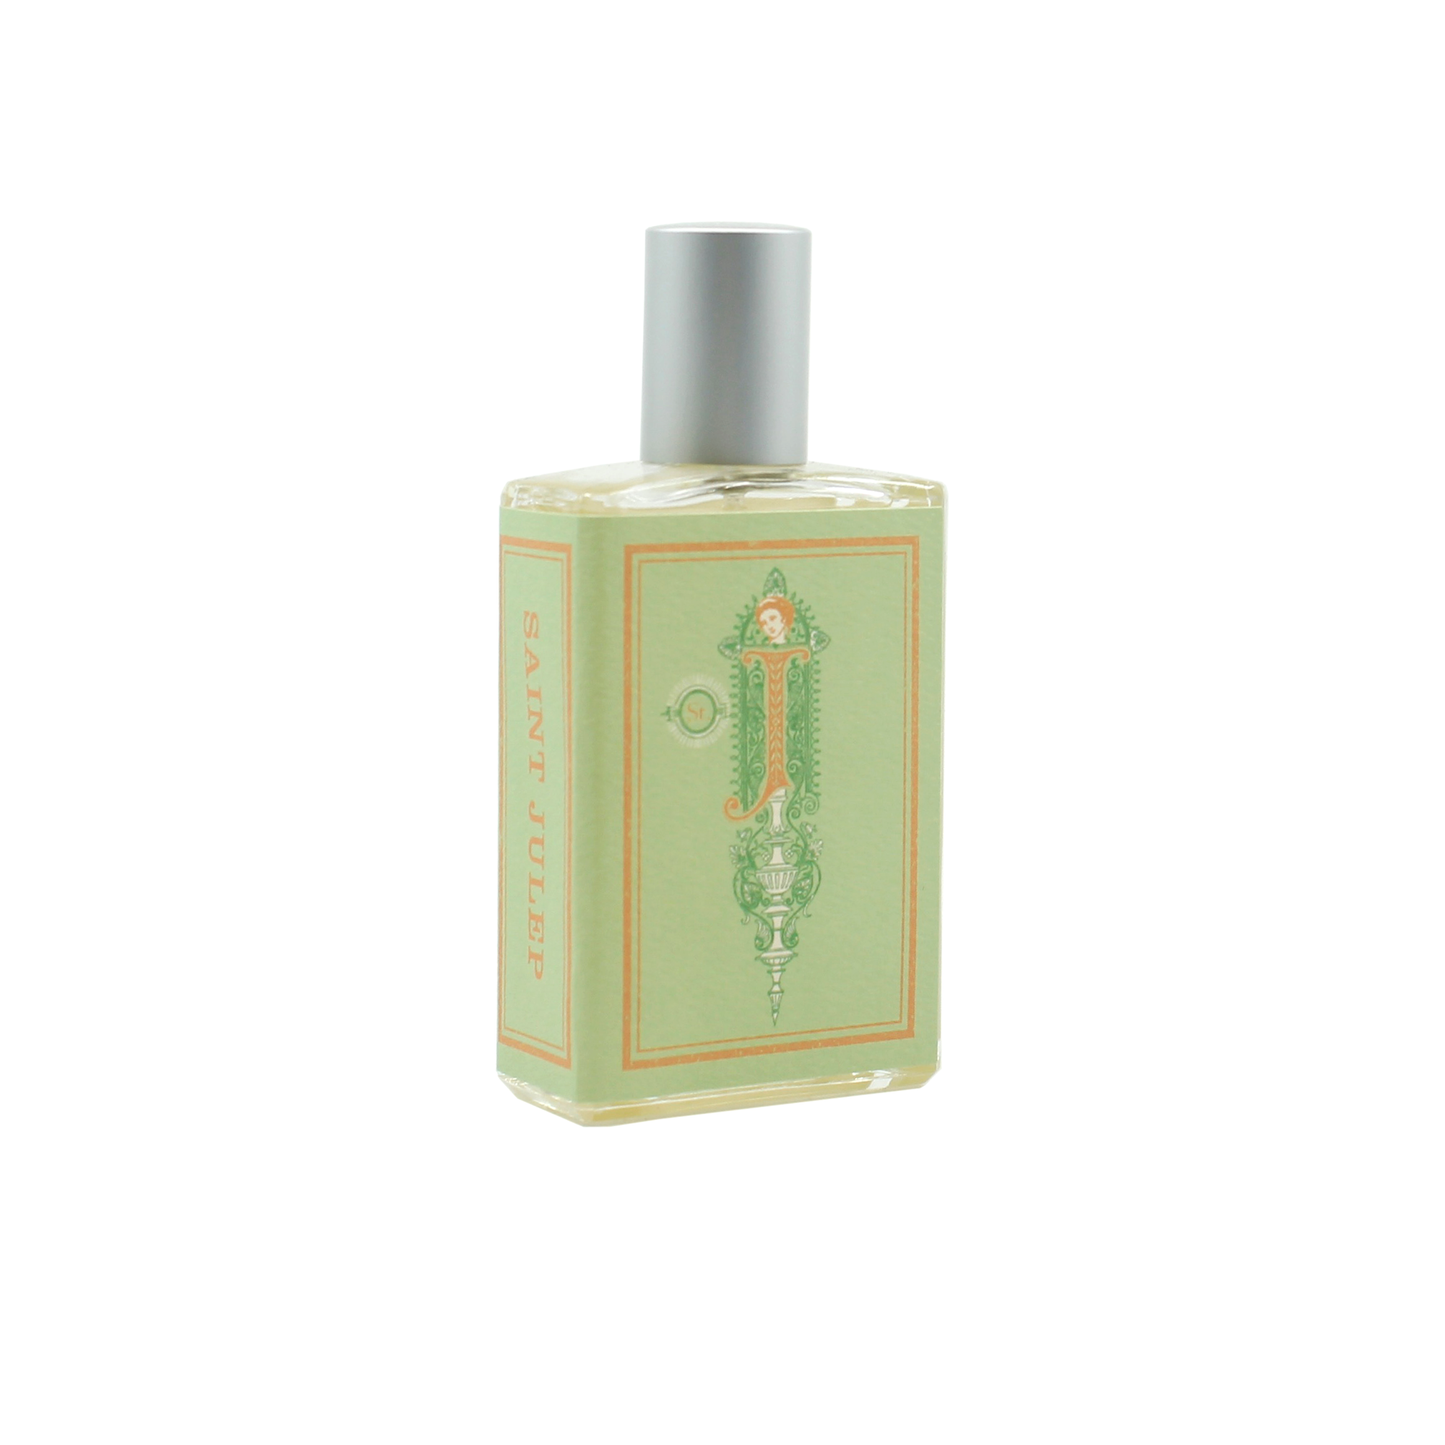 Saint Julep .5 oz Eau de Parfum - Travel Spray